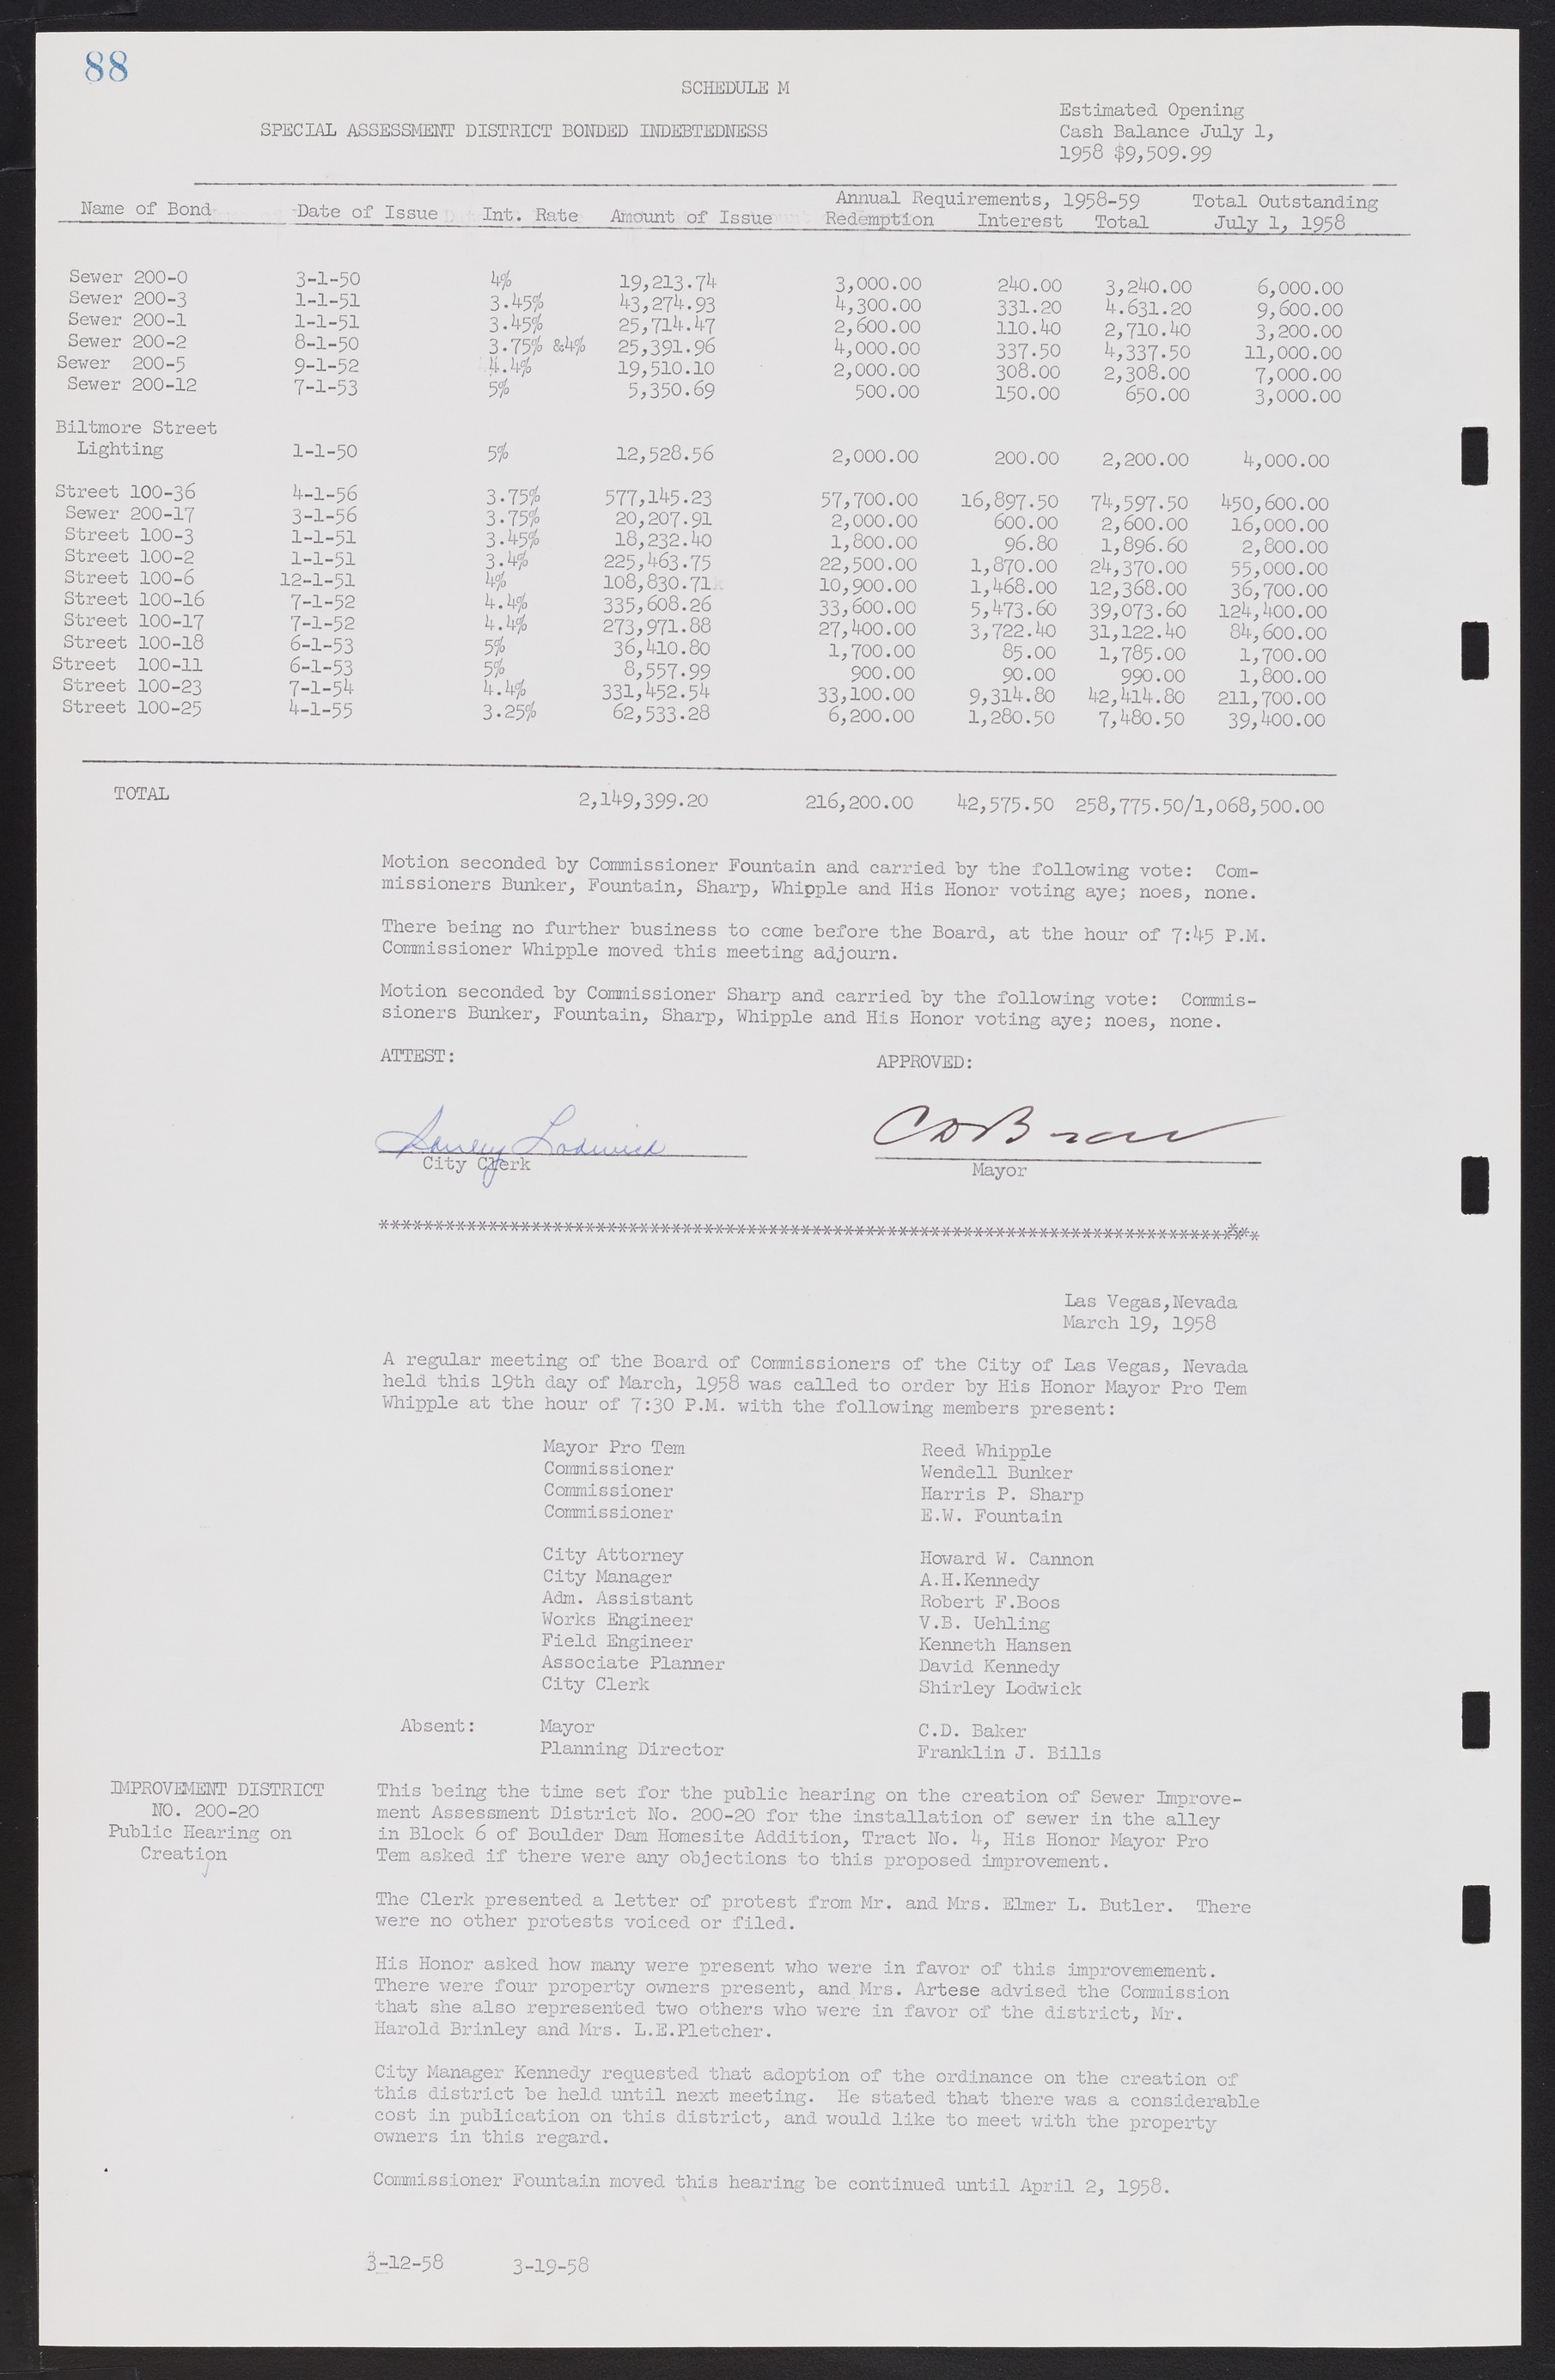 Las Vegas City Commission Minutes, November 20, 1957 to December 2, 1959, lvc000011-92